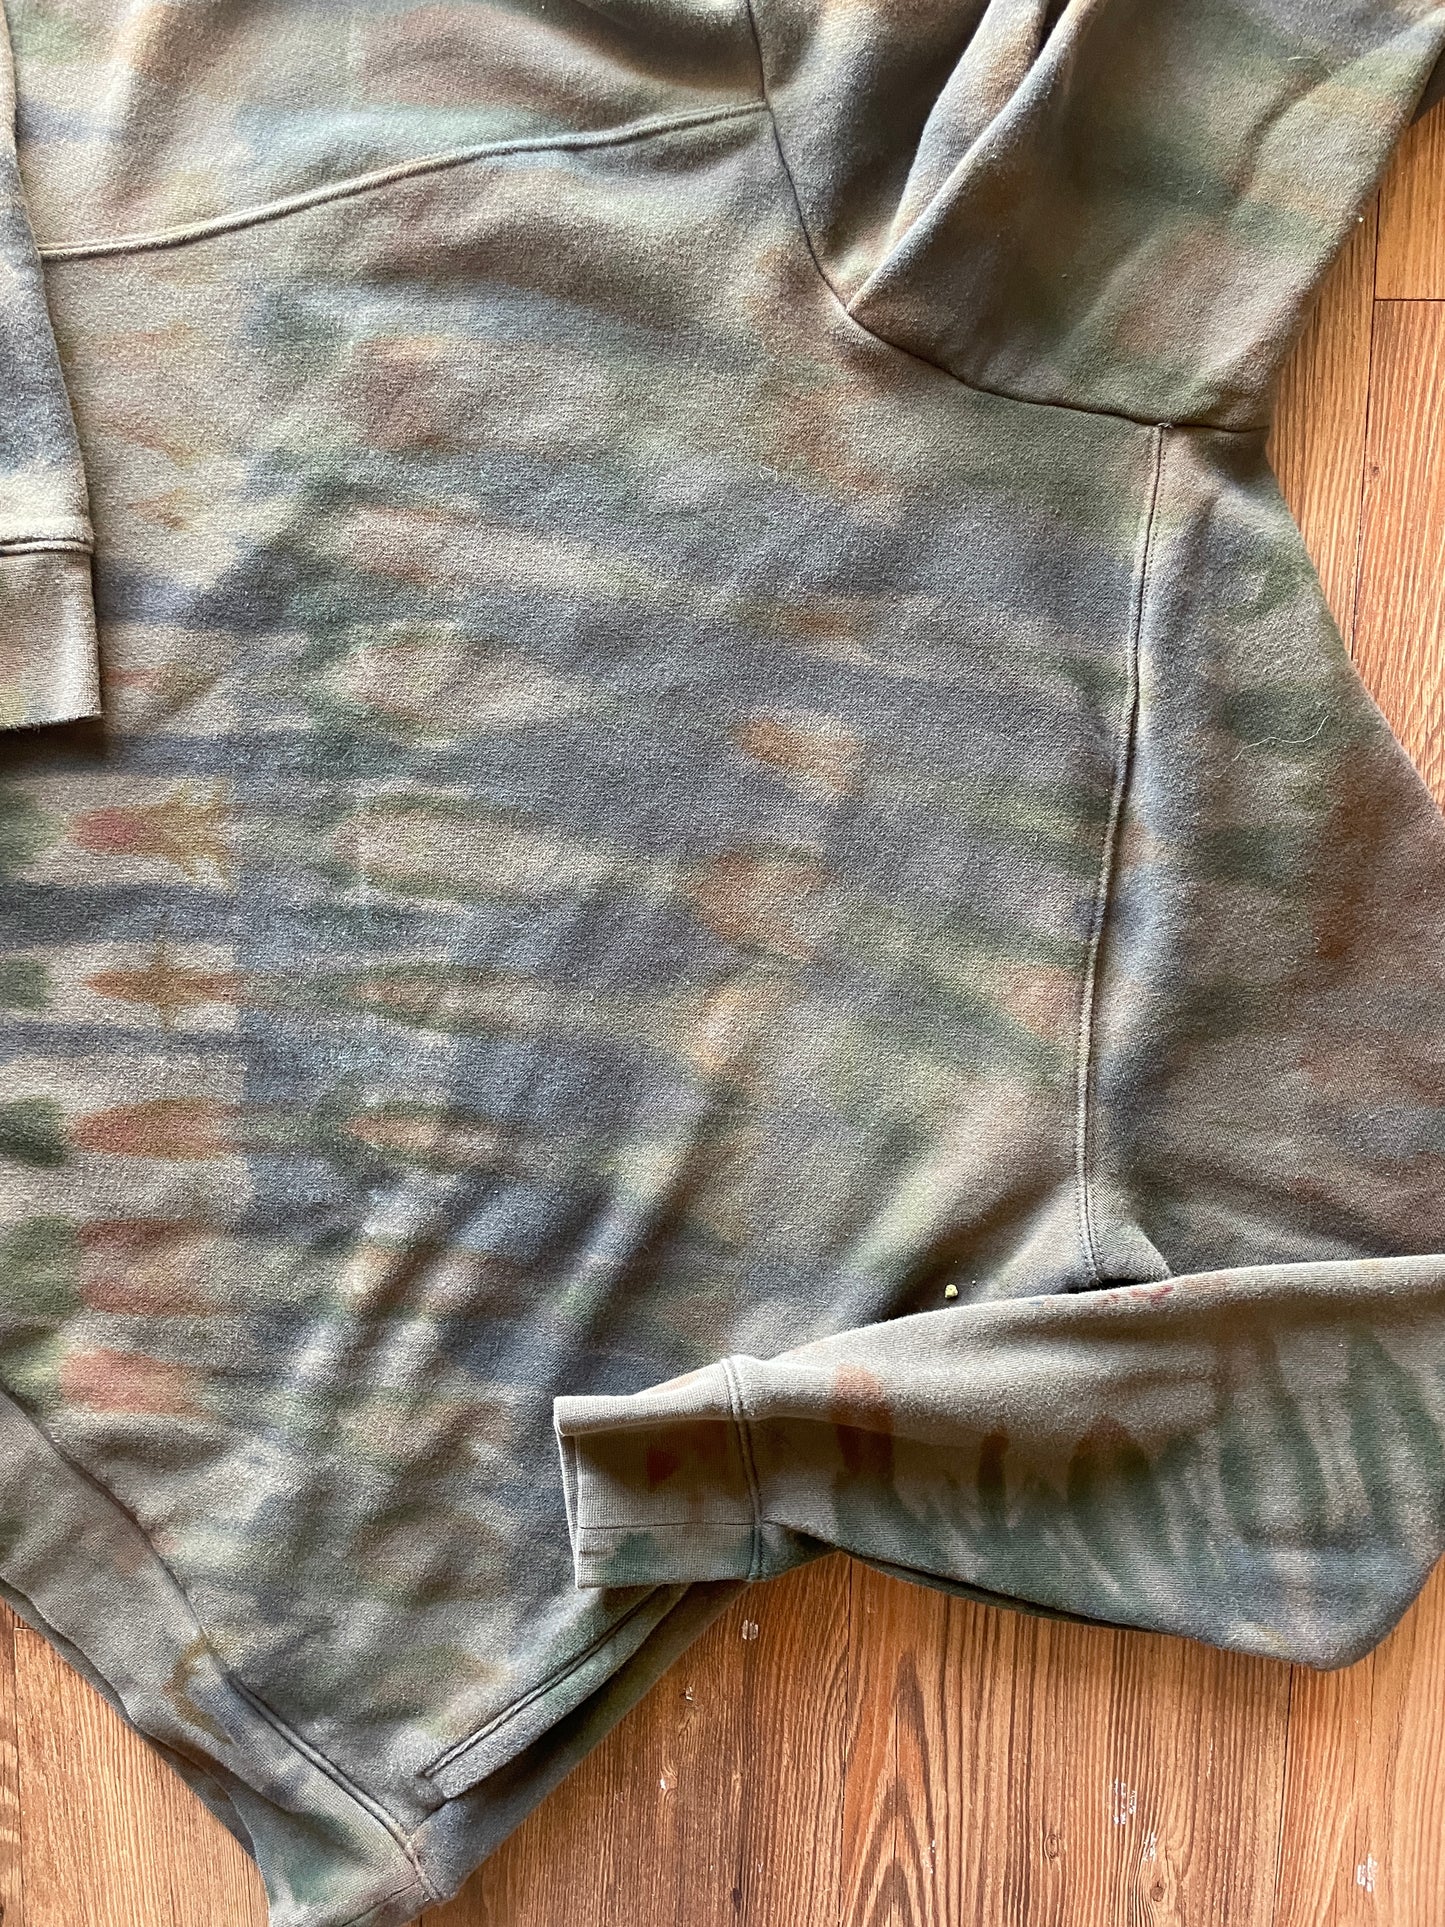 XL Men’s Handmade Earth Tones Tie Dye Hoodie | One-Of-a-Kind Olive Green and Gray Long Sleeve Sweatshirt